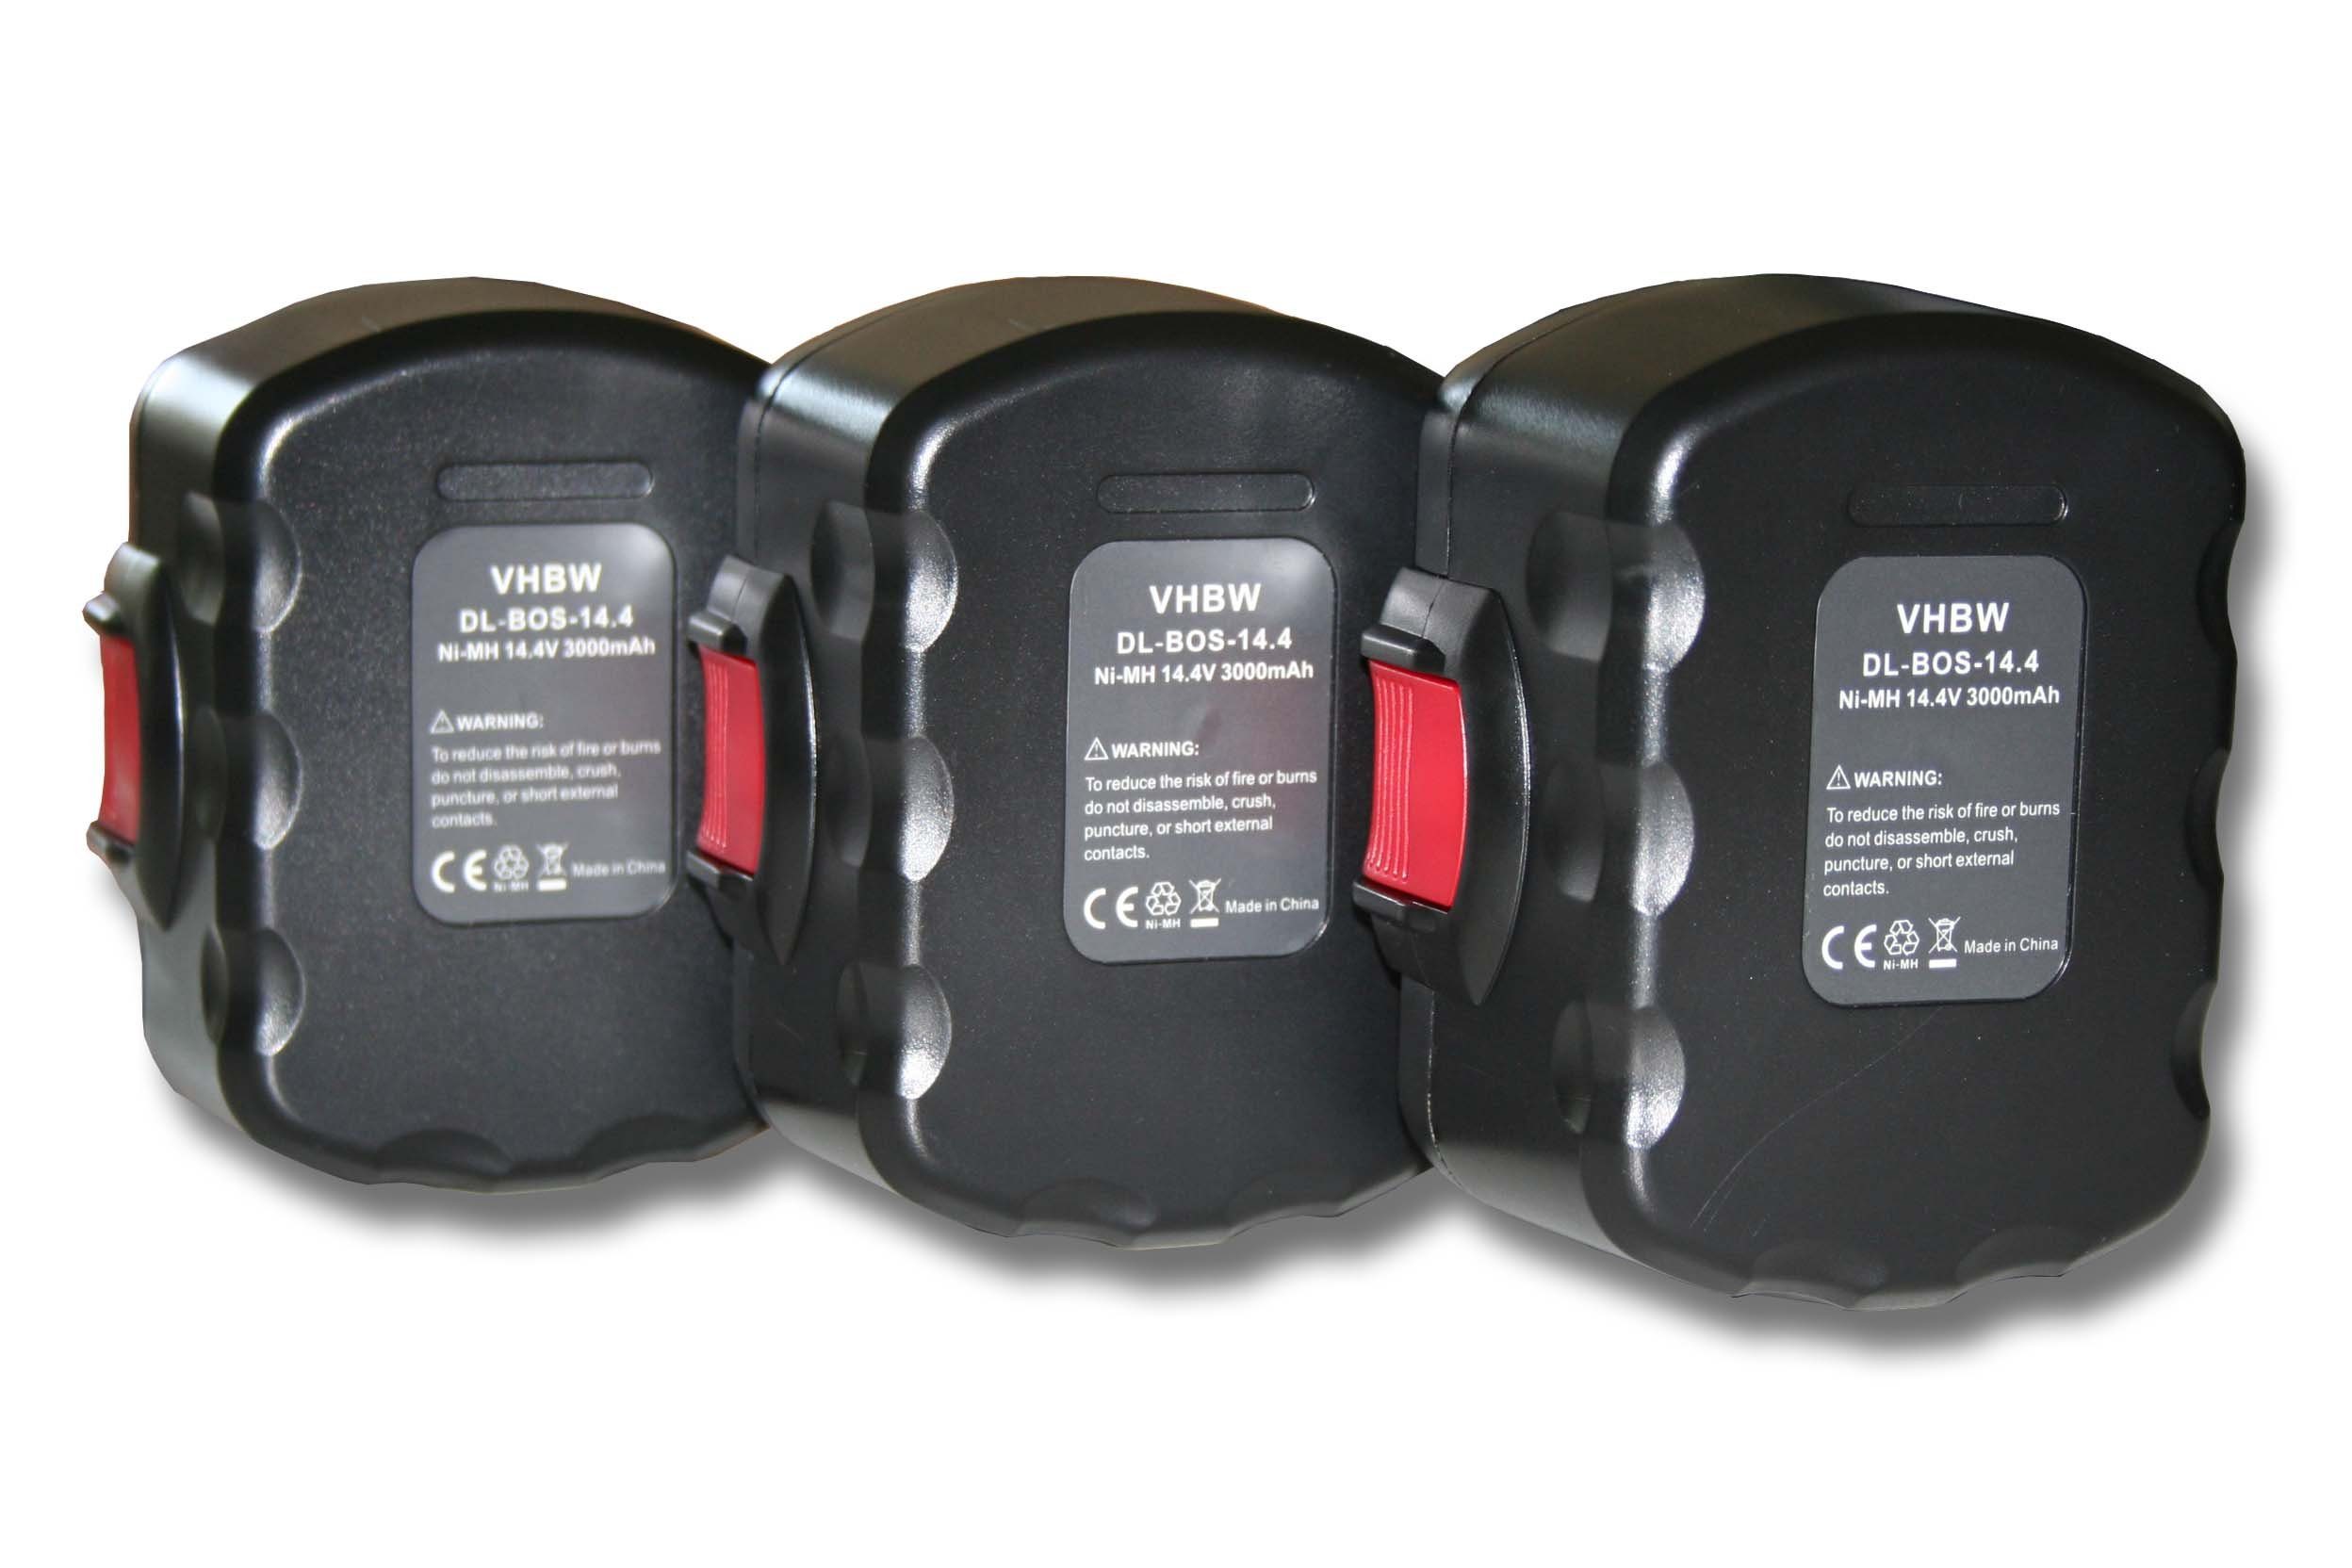 vhbw Akku passend für V-i Bosch 14.4, mAh 14, 14,4 3000 Elektrowerkzeug PSB 14,4V, 14.4V, PSB PSR PLI mit (3000mAh, 14.4V, PSB NiMH) PKS 14, Kompatibel